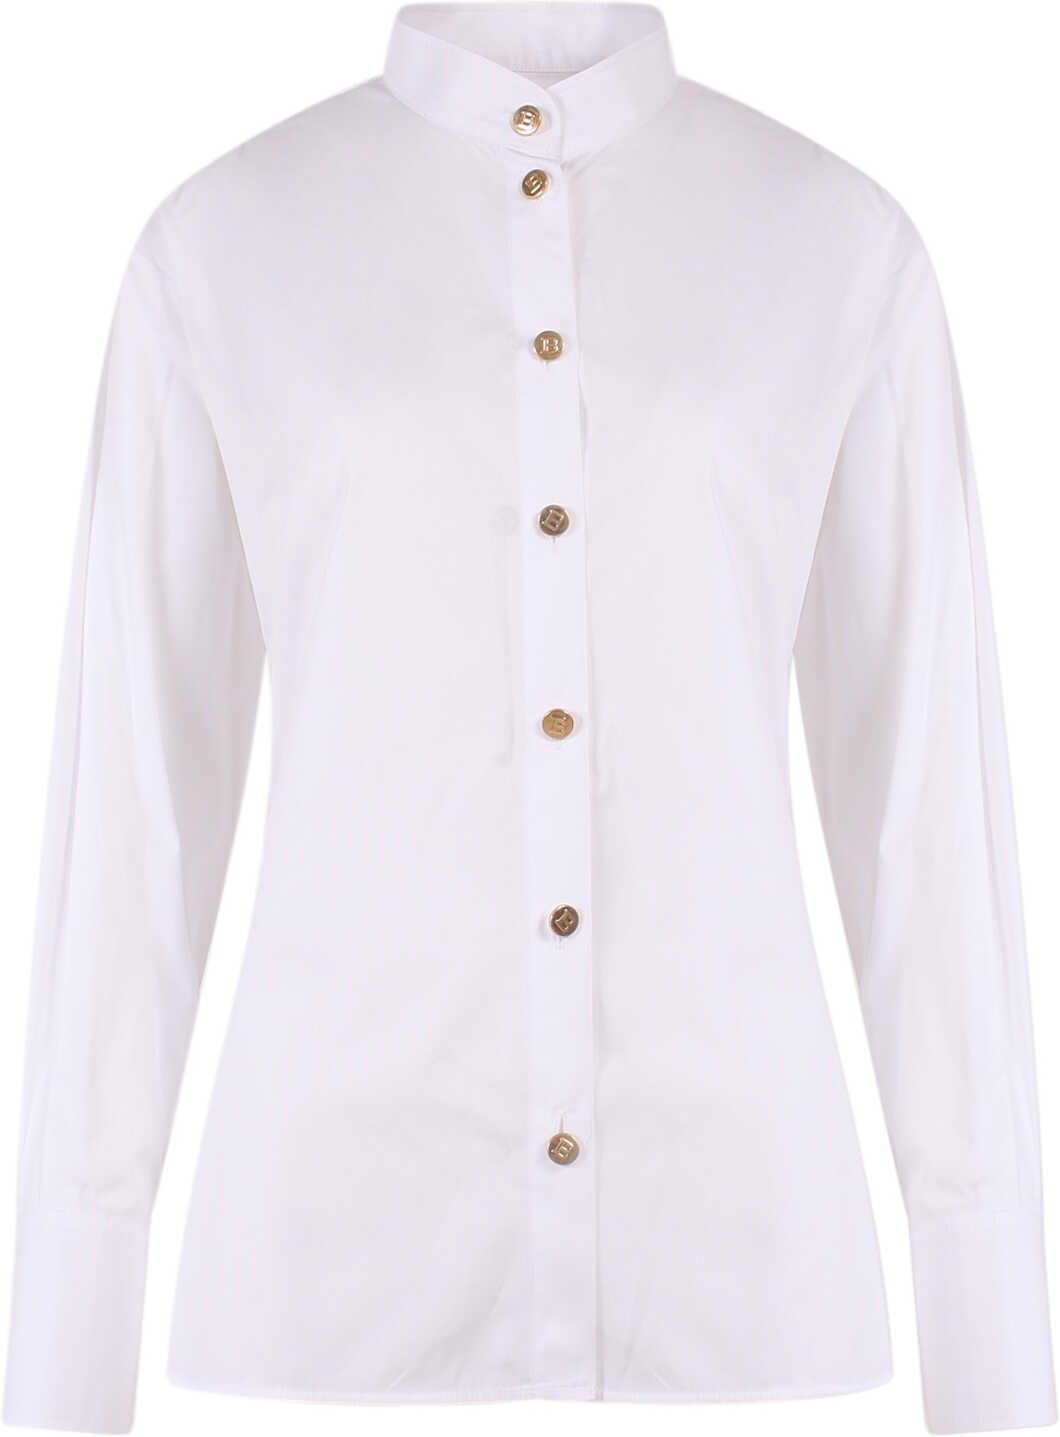 Balmain Shirt White